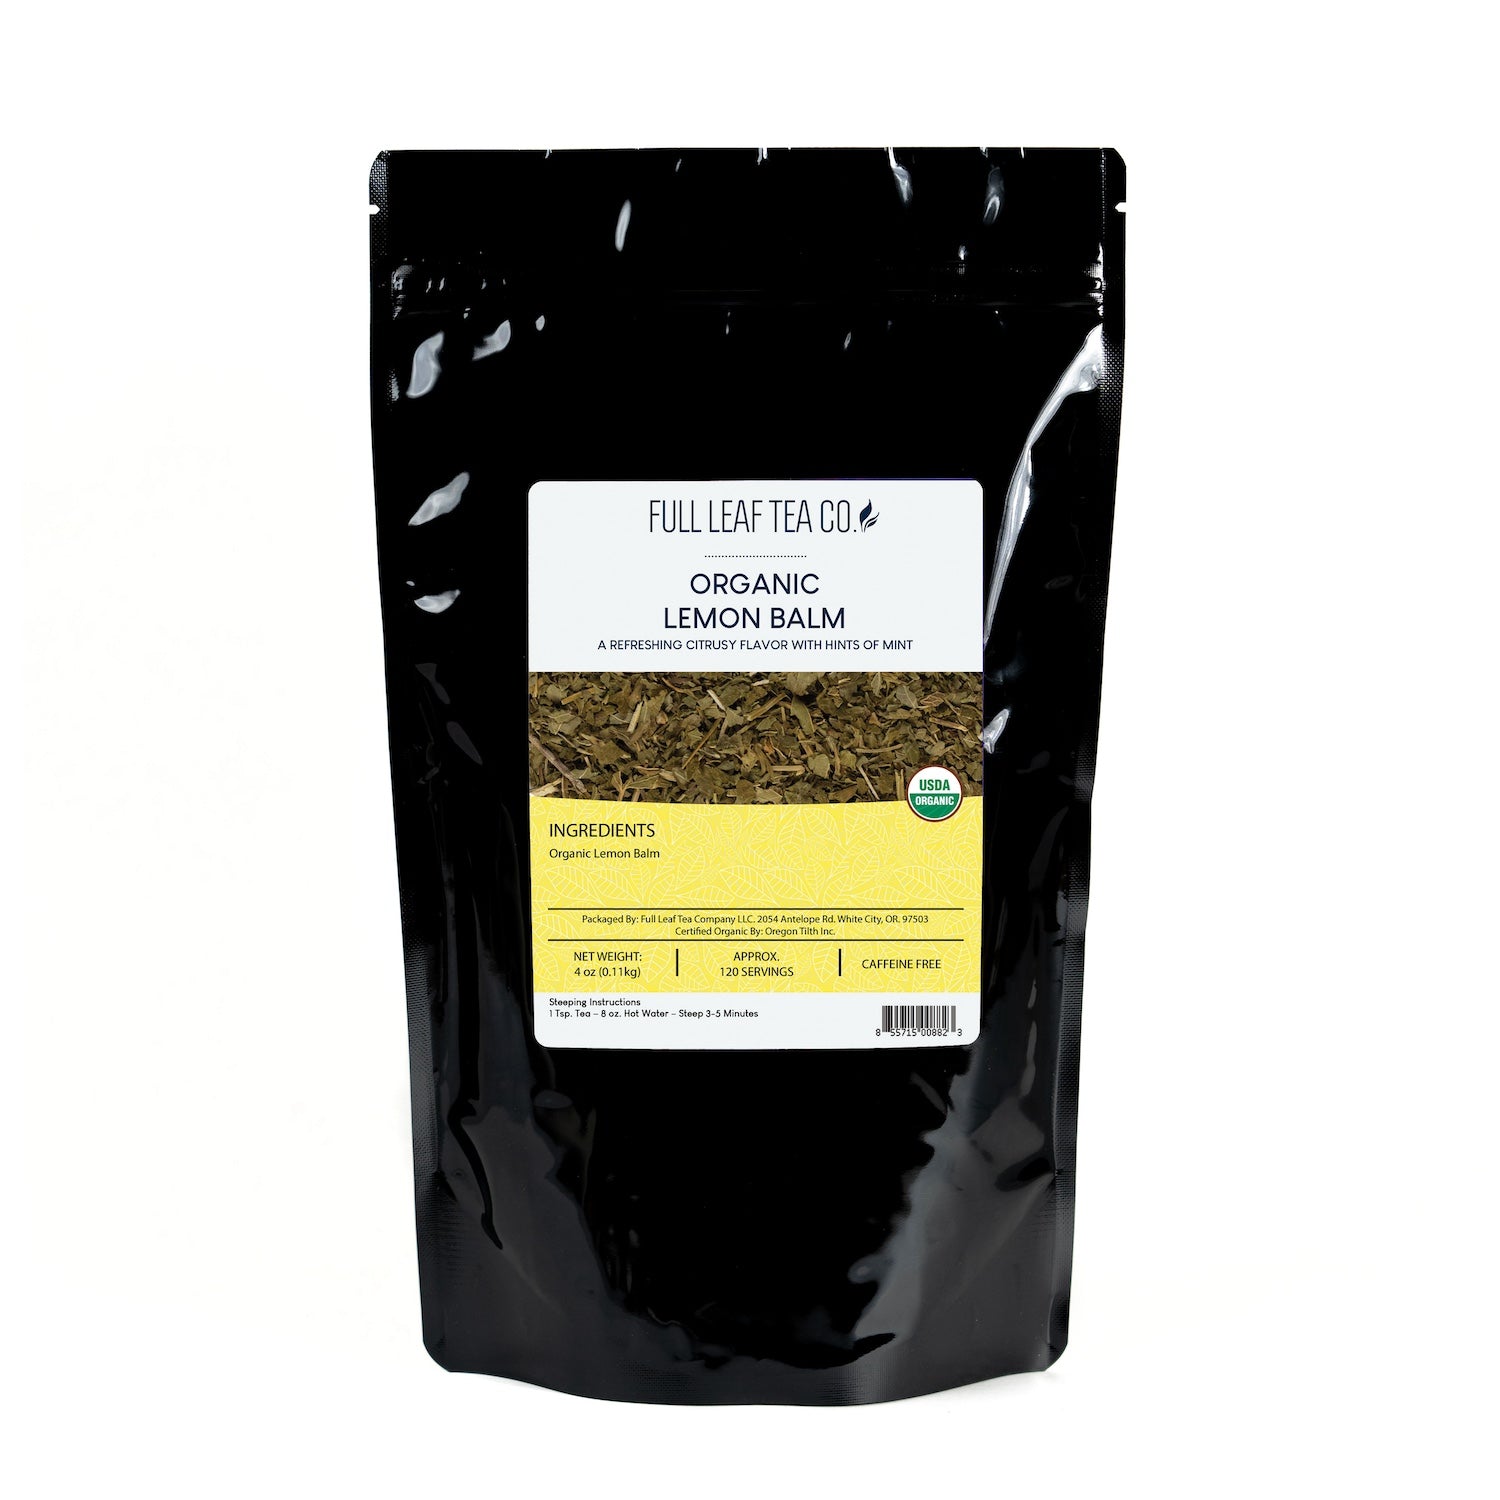 Organic Lemon Balm - Loose Leaf Tea - Full Leaf Tea Company